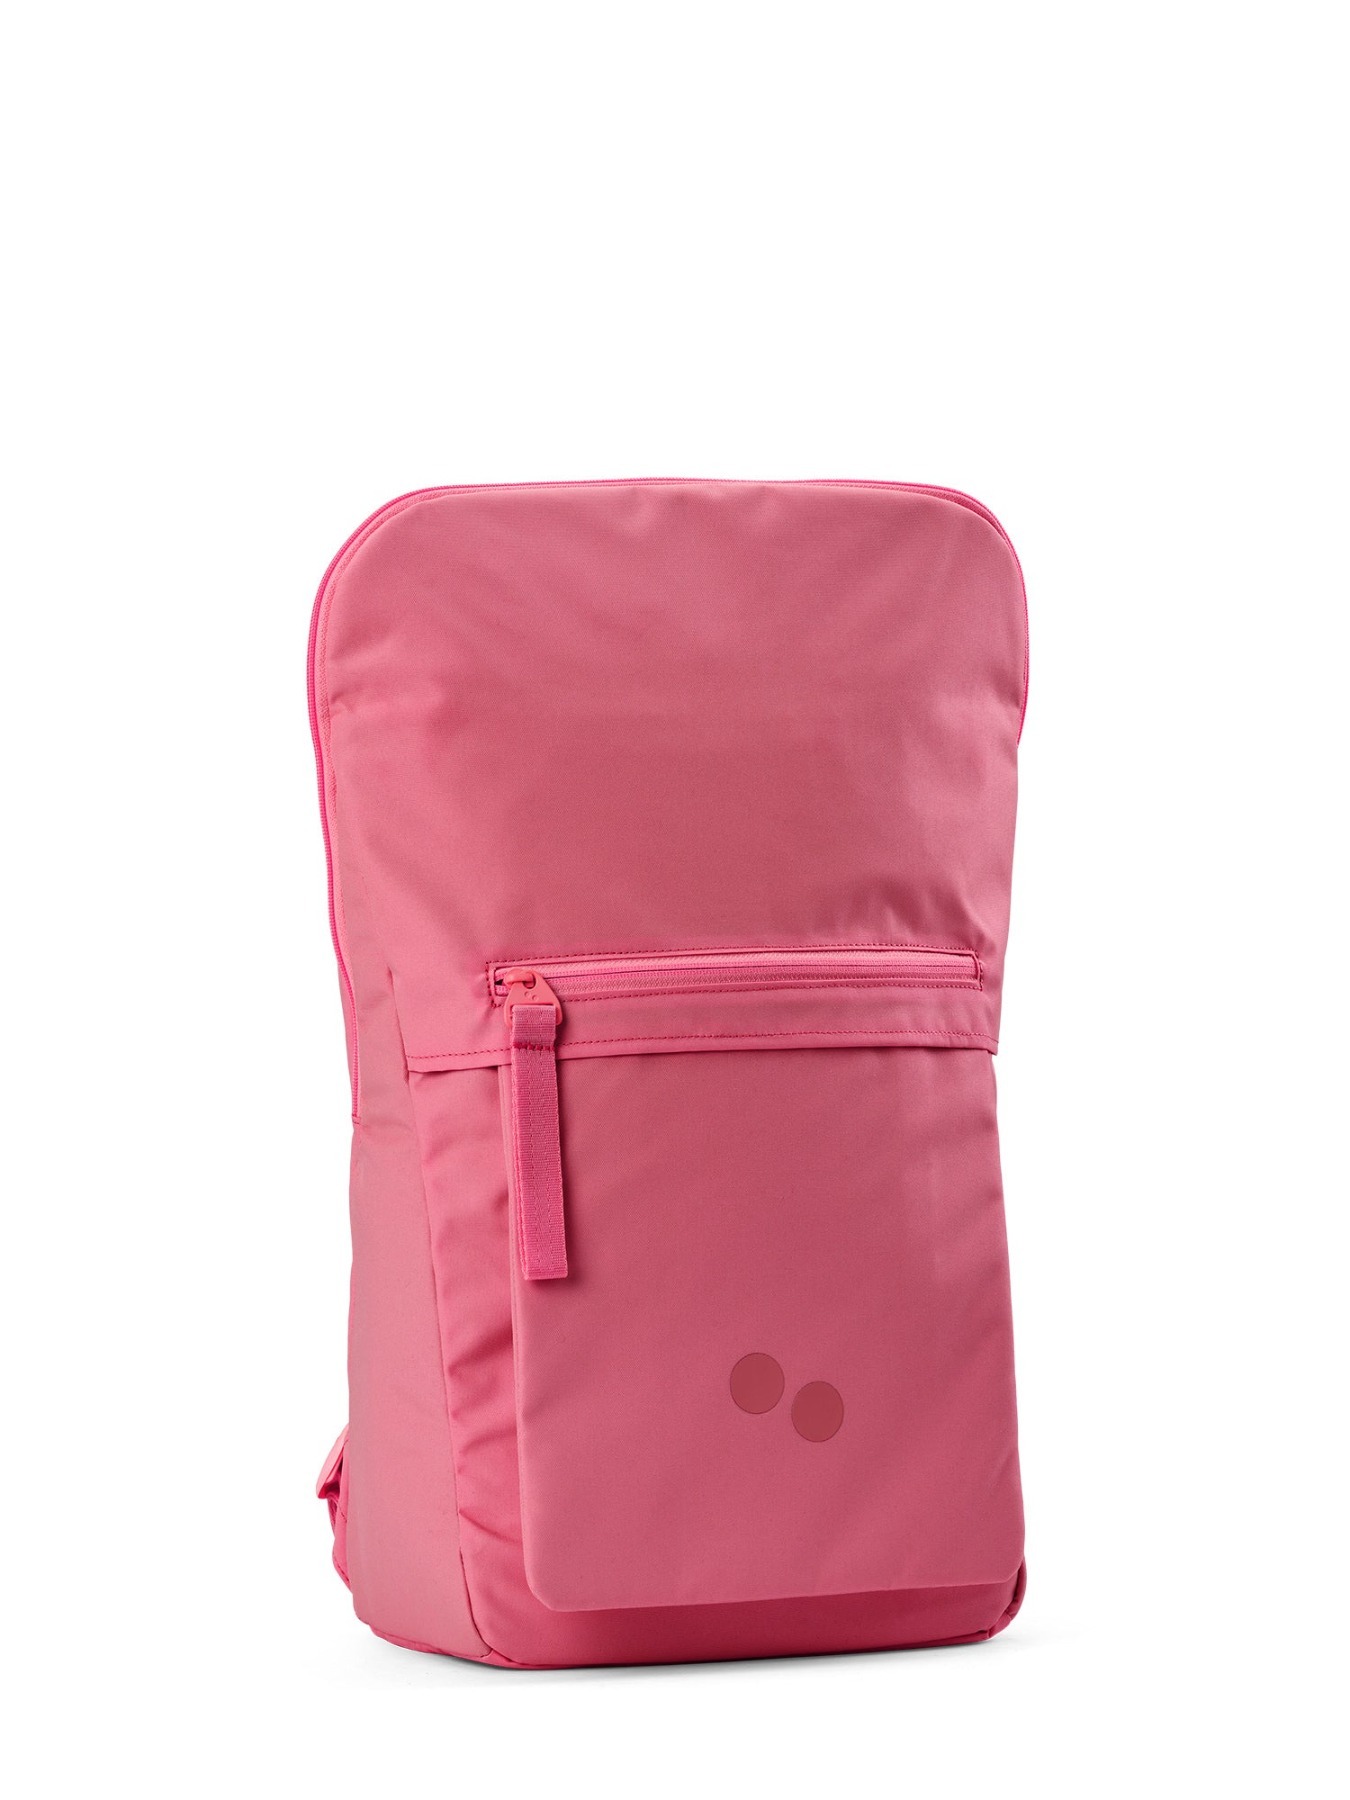 pinqponq Backpack KLAK - Watermelon Pink 2